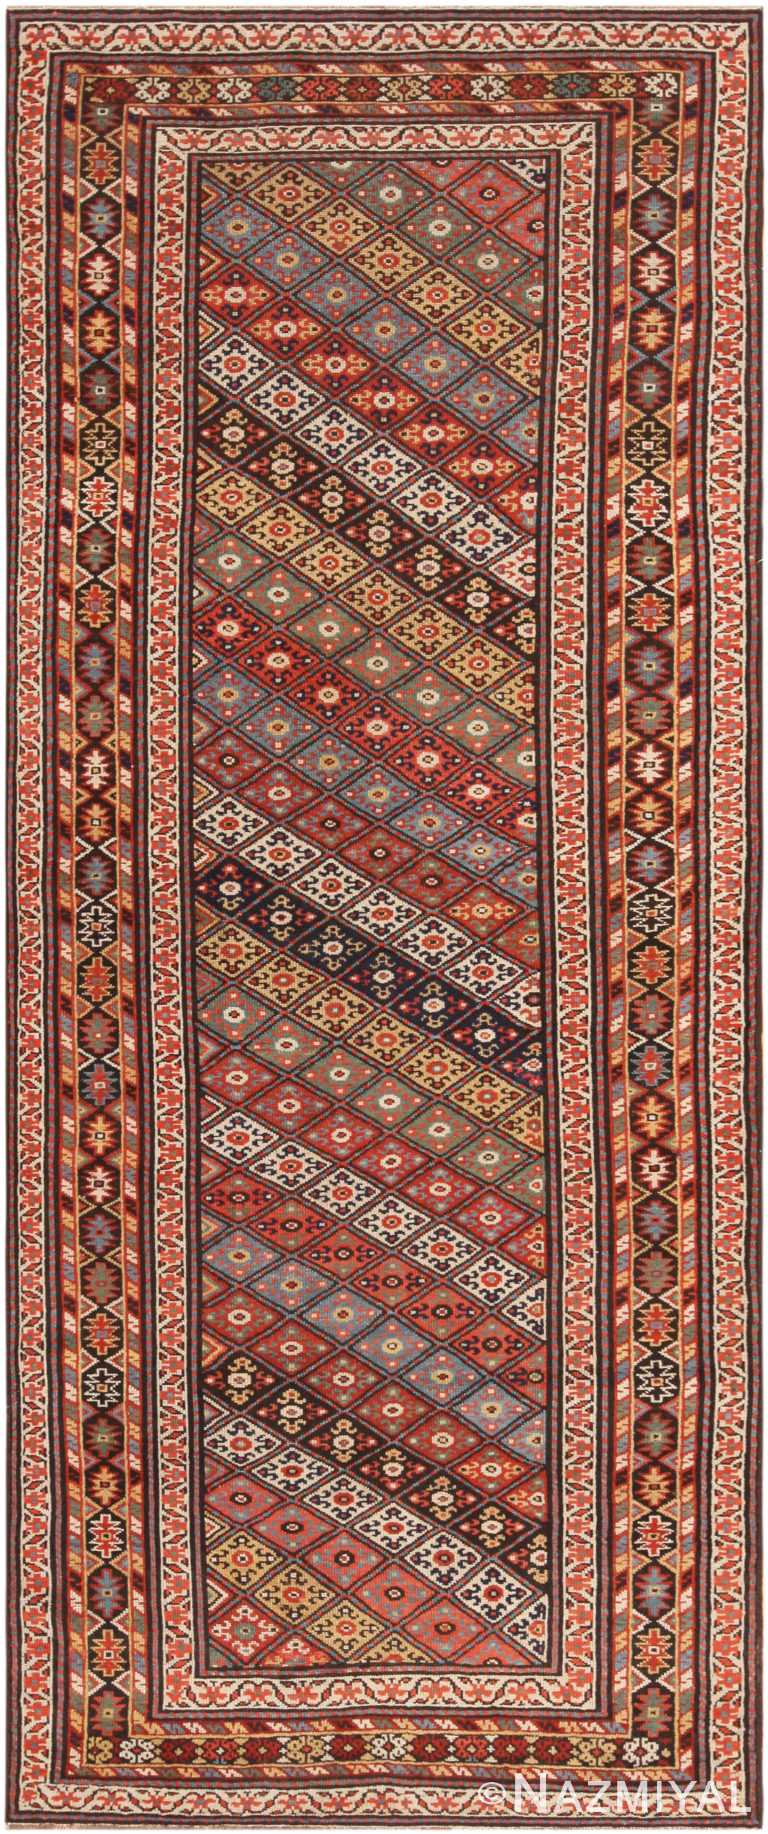 Antique Persian Kurdish Runner Rug 72043 by Nazmiyal Antique Rugs